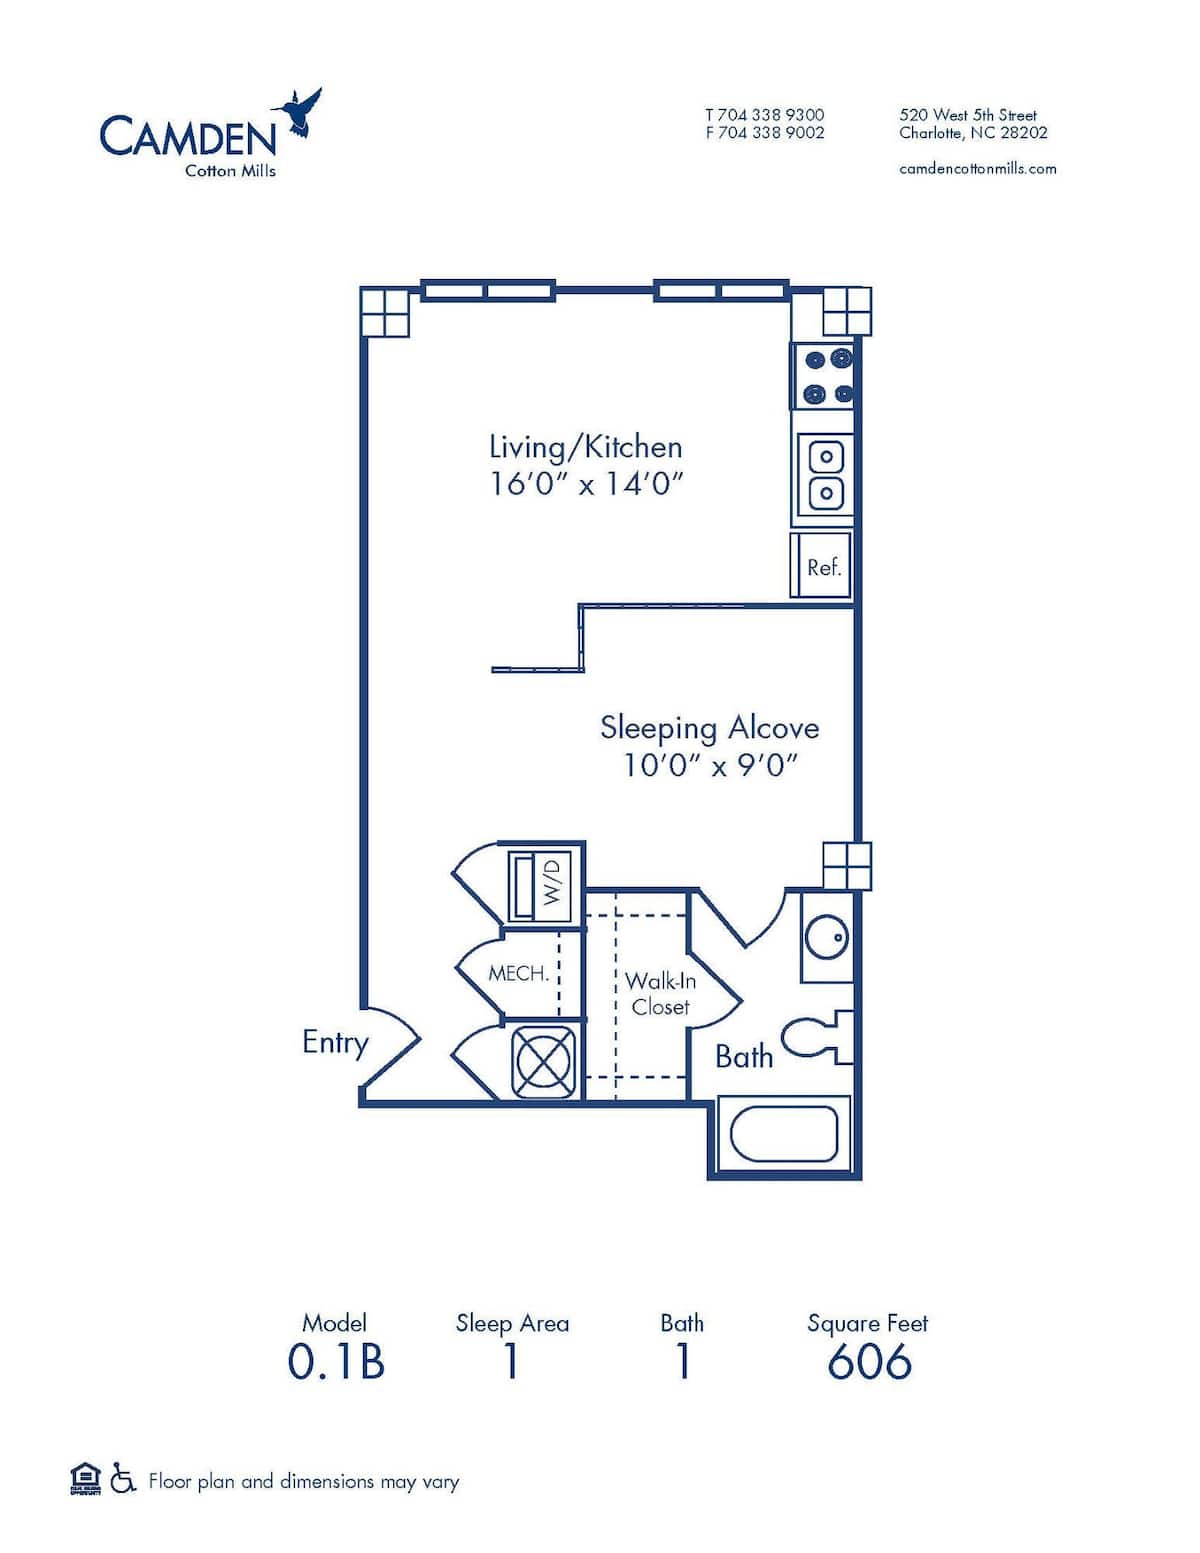 Floorplan diagram for 0.1B, showing Studio